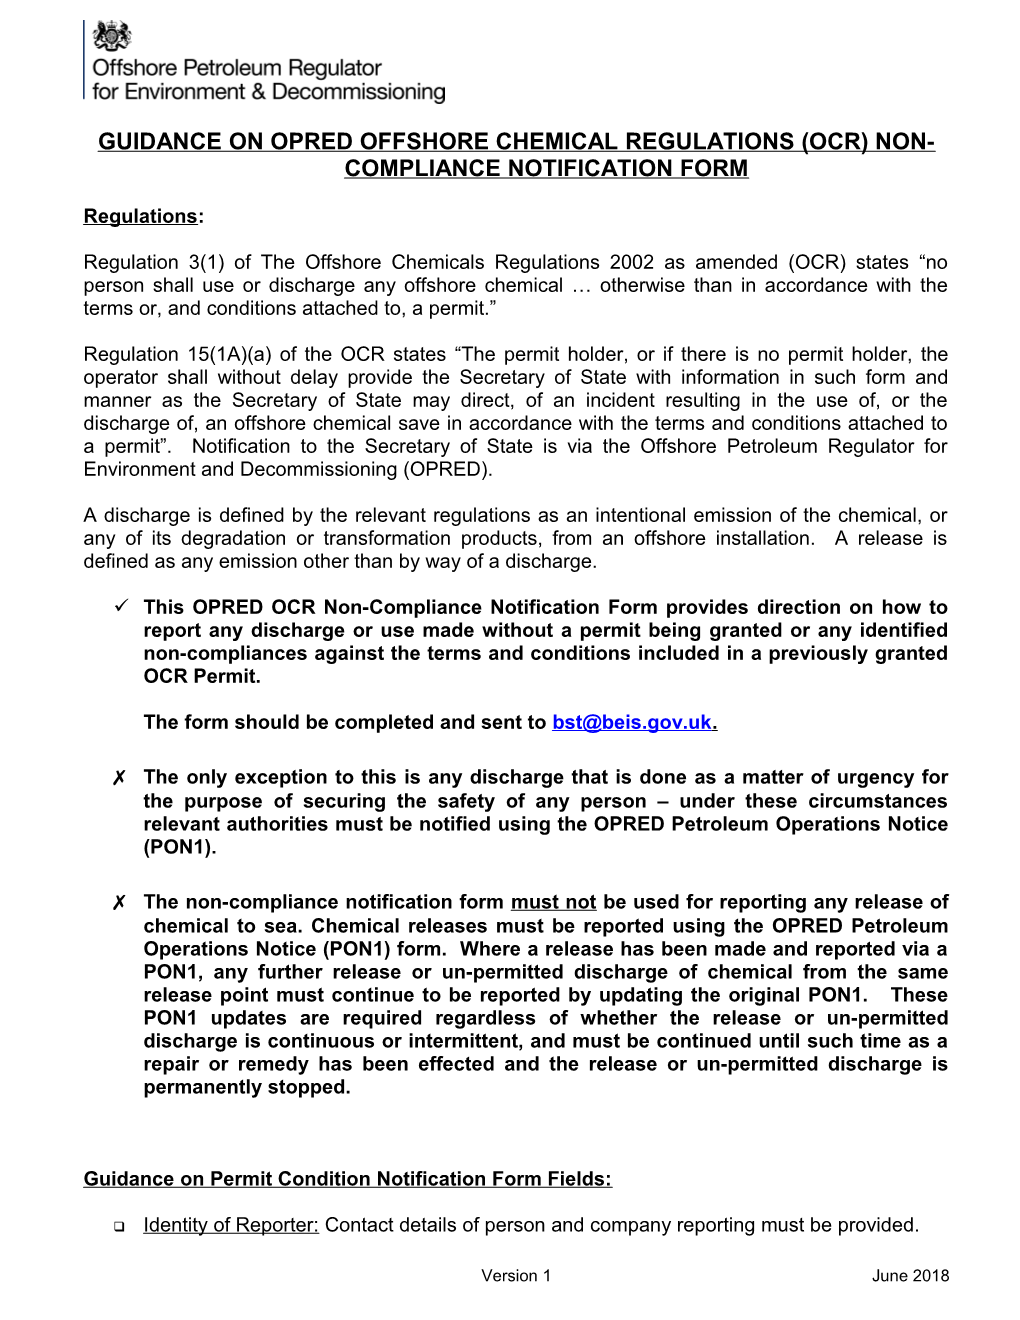 OCR Guidance on Regulatory Non-Compliance Notification Form